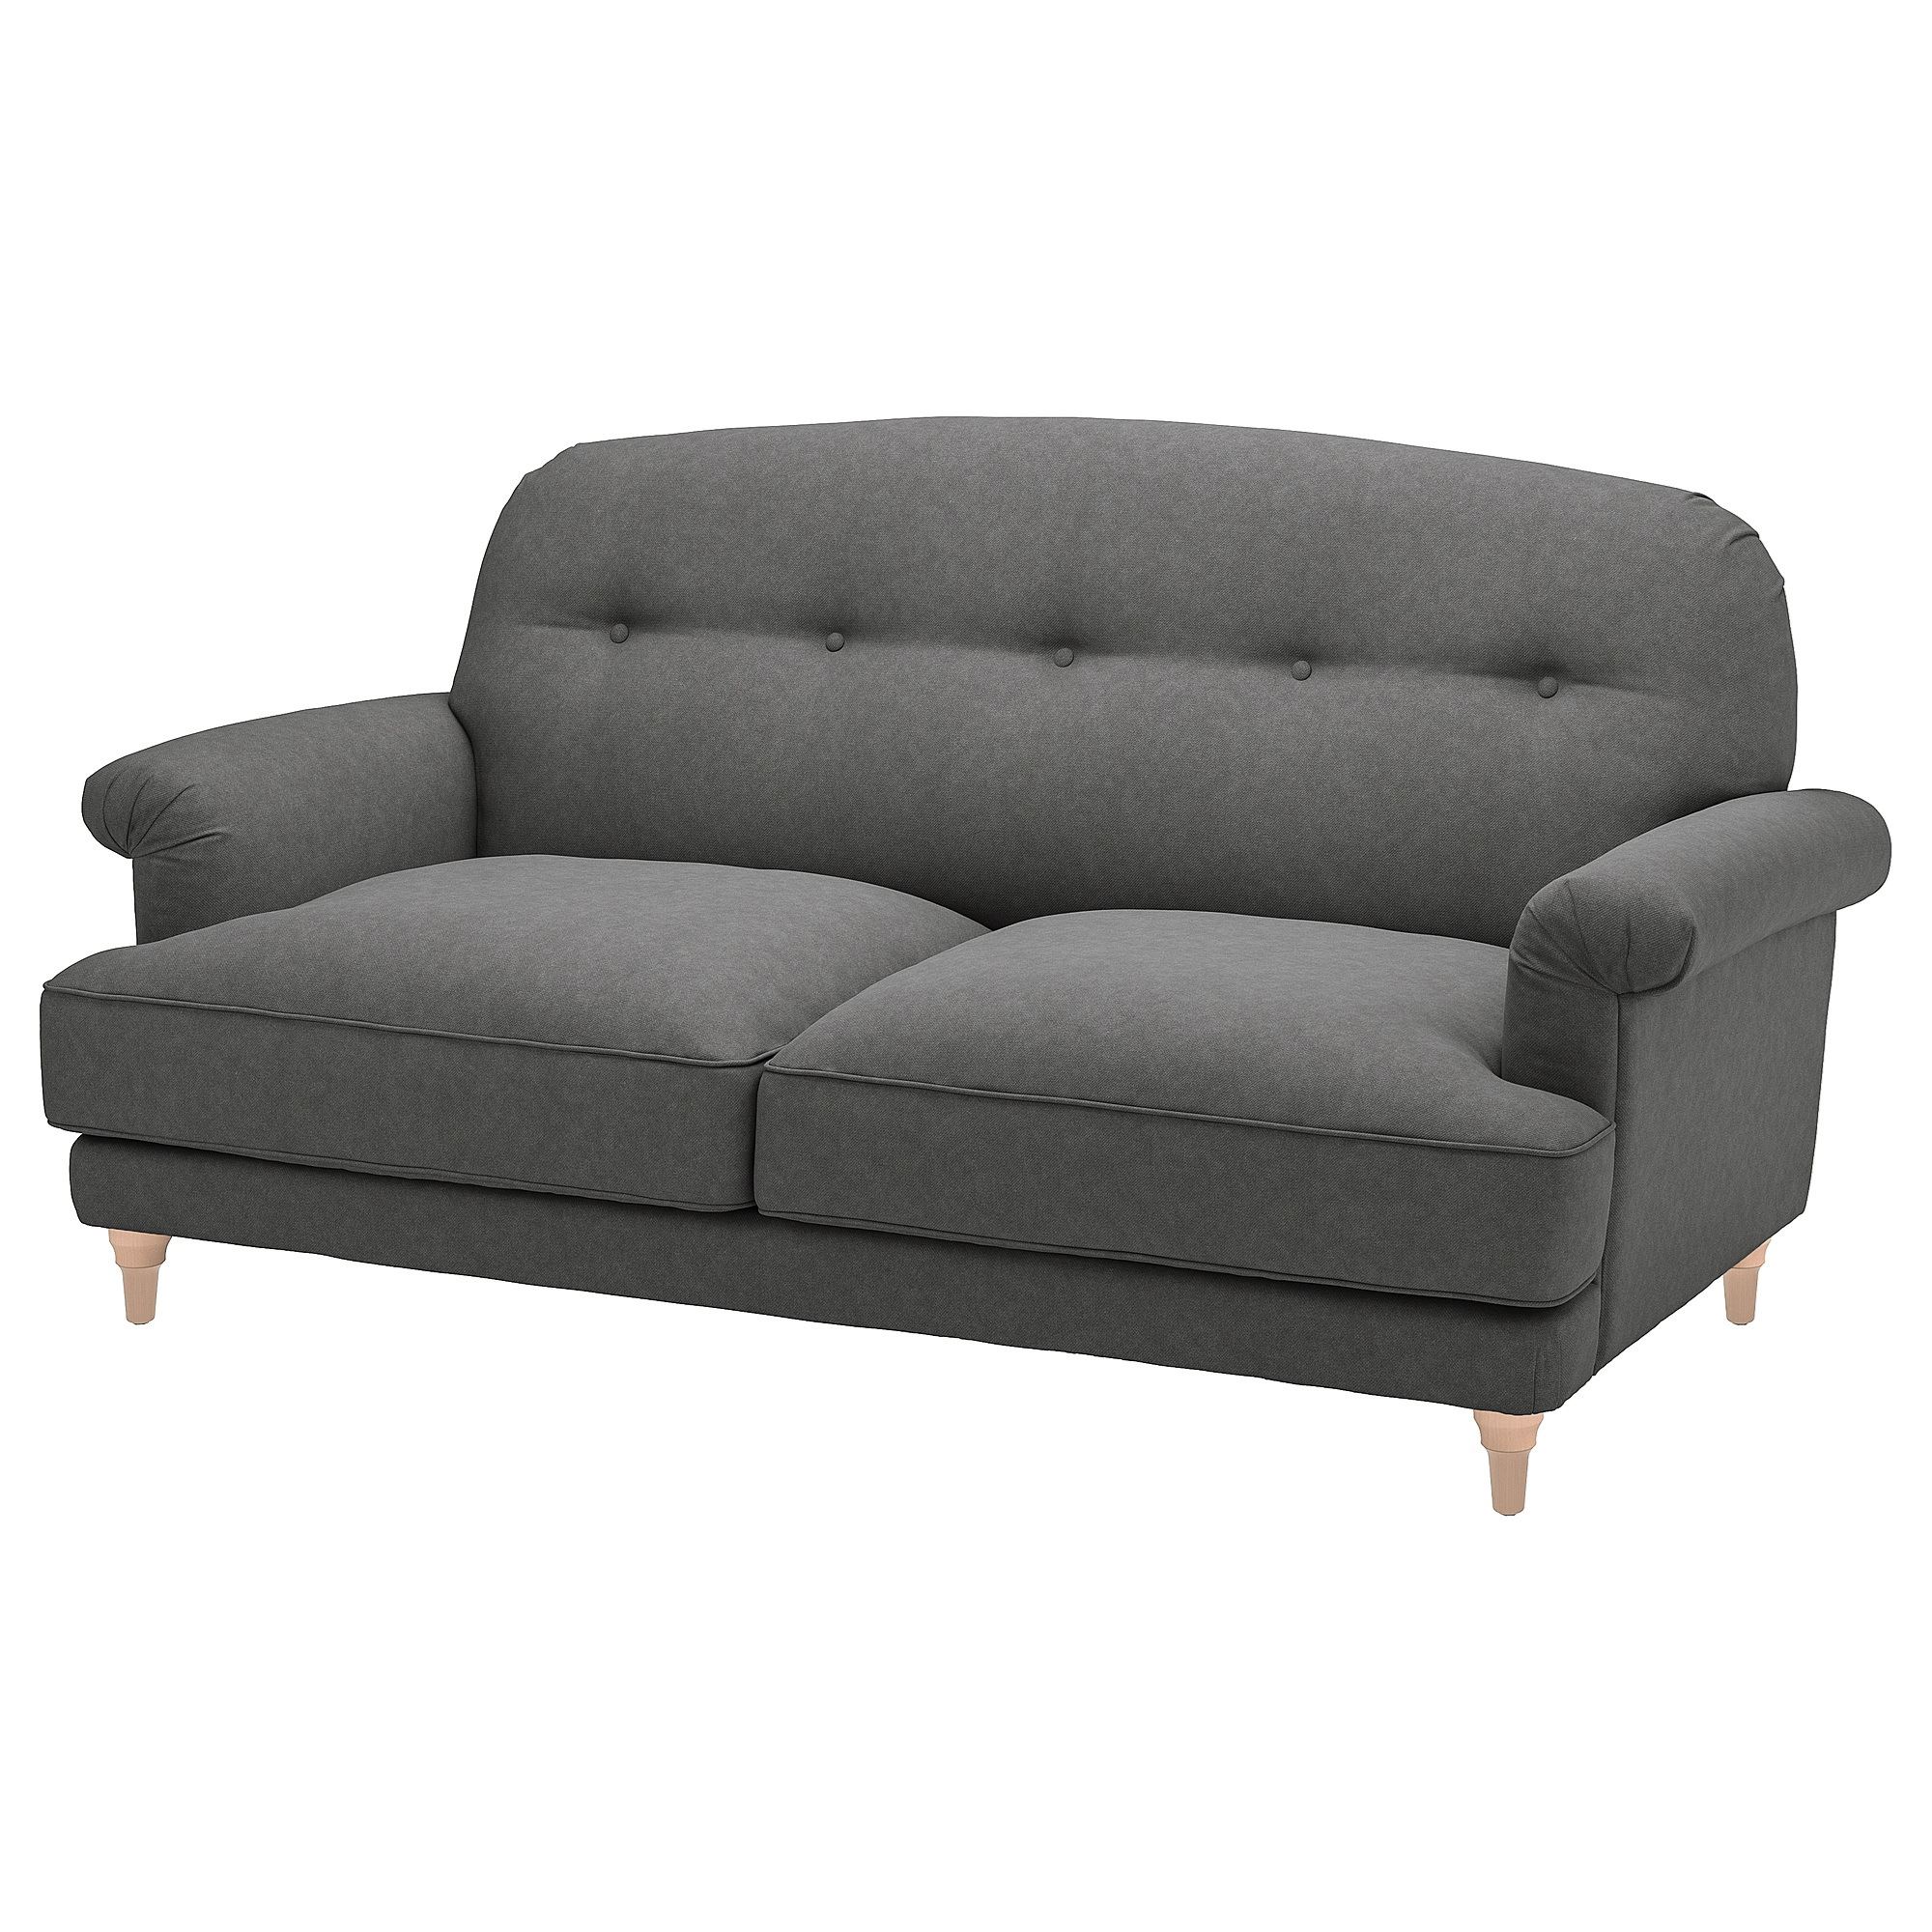 ESSEBODA tallmyra orta gri 2'li kanepe | IKEA